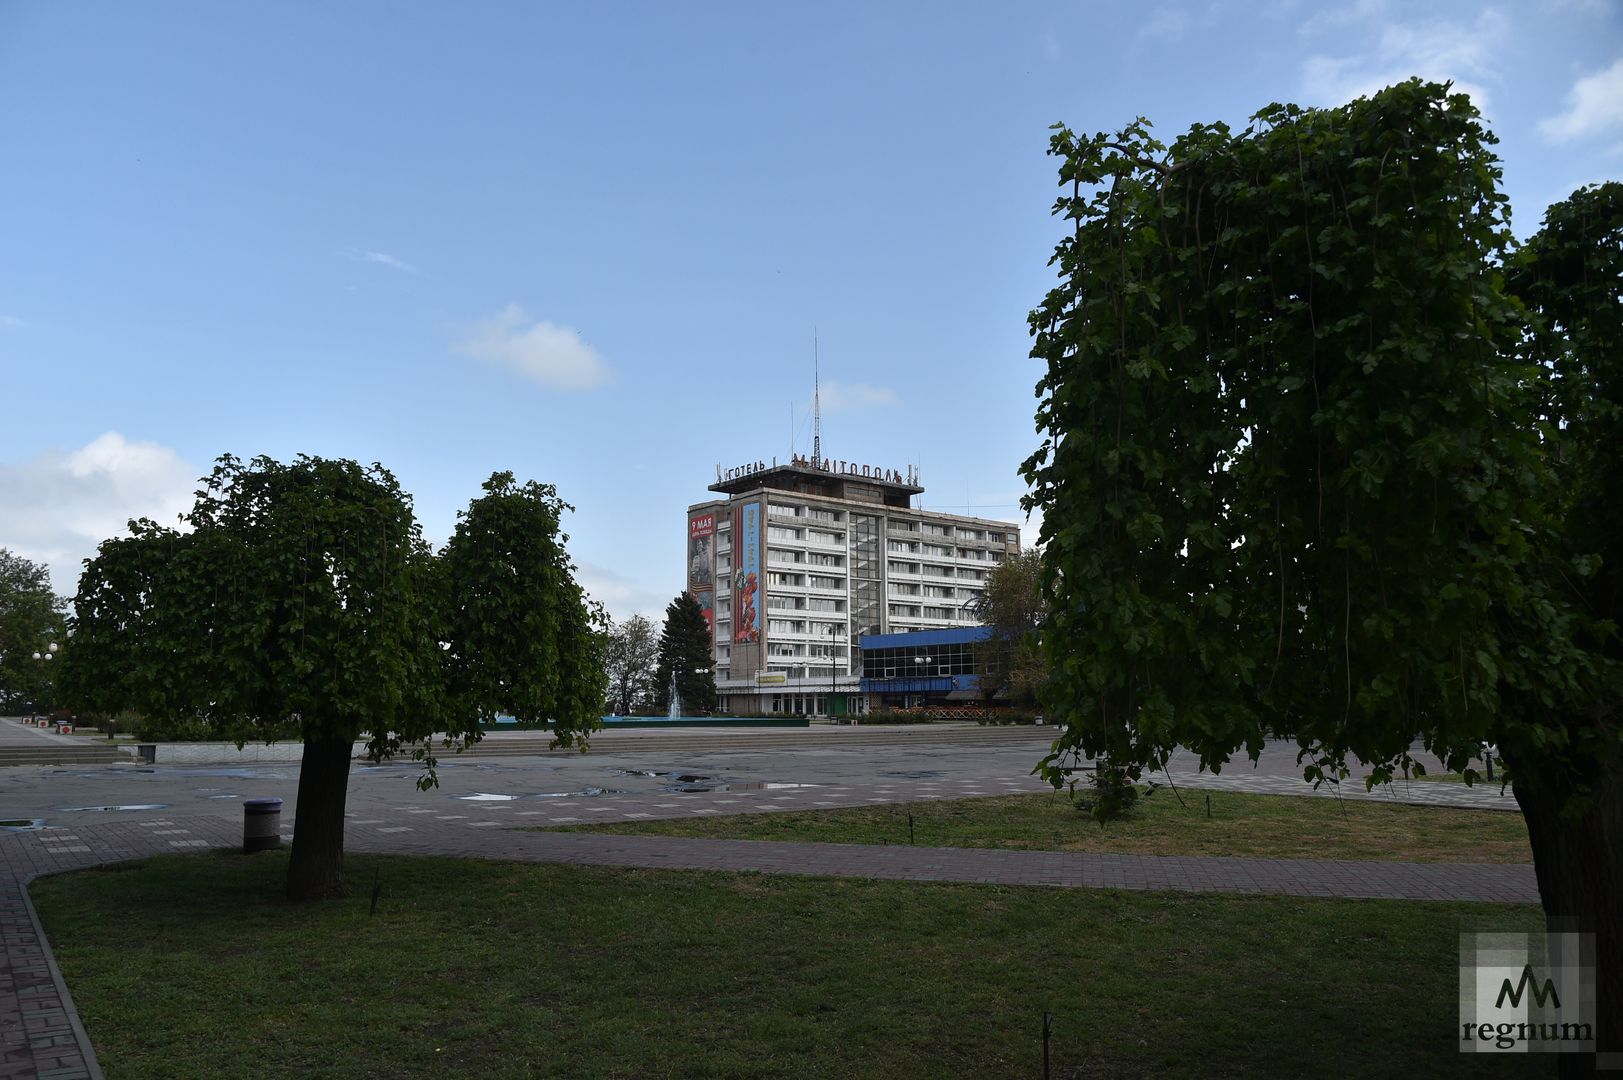 Главная площадь Мелитополя